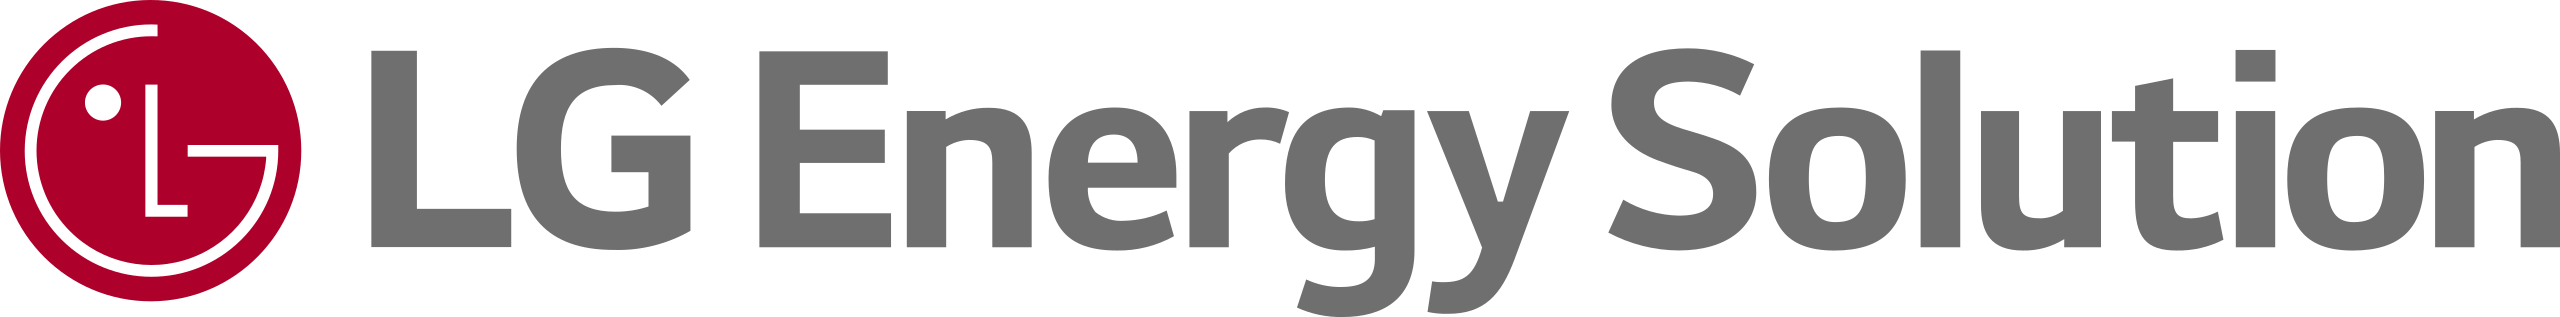 lg-energy-solutions